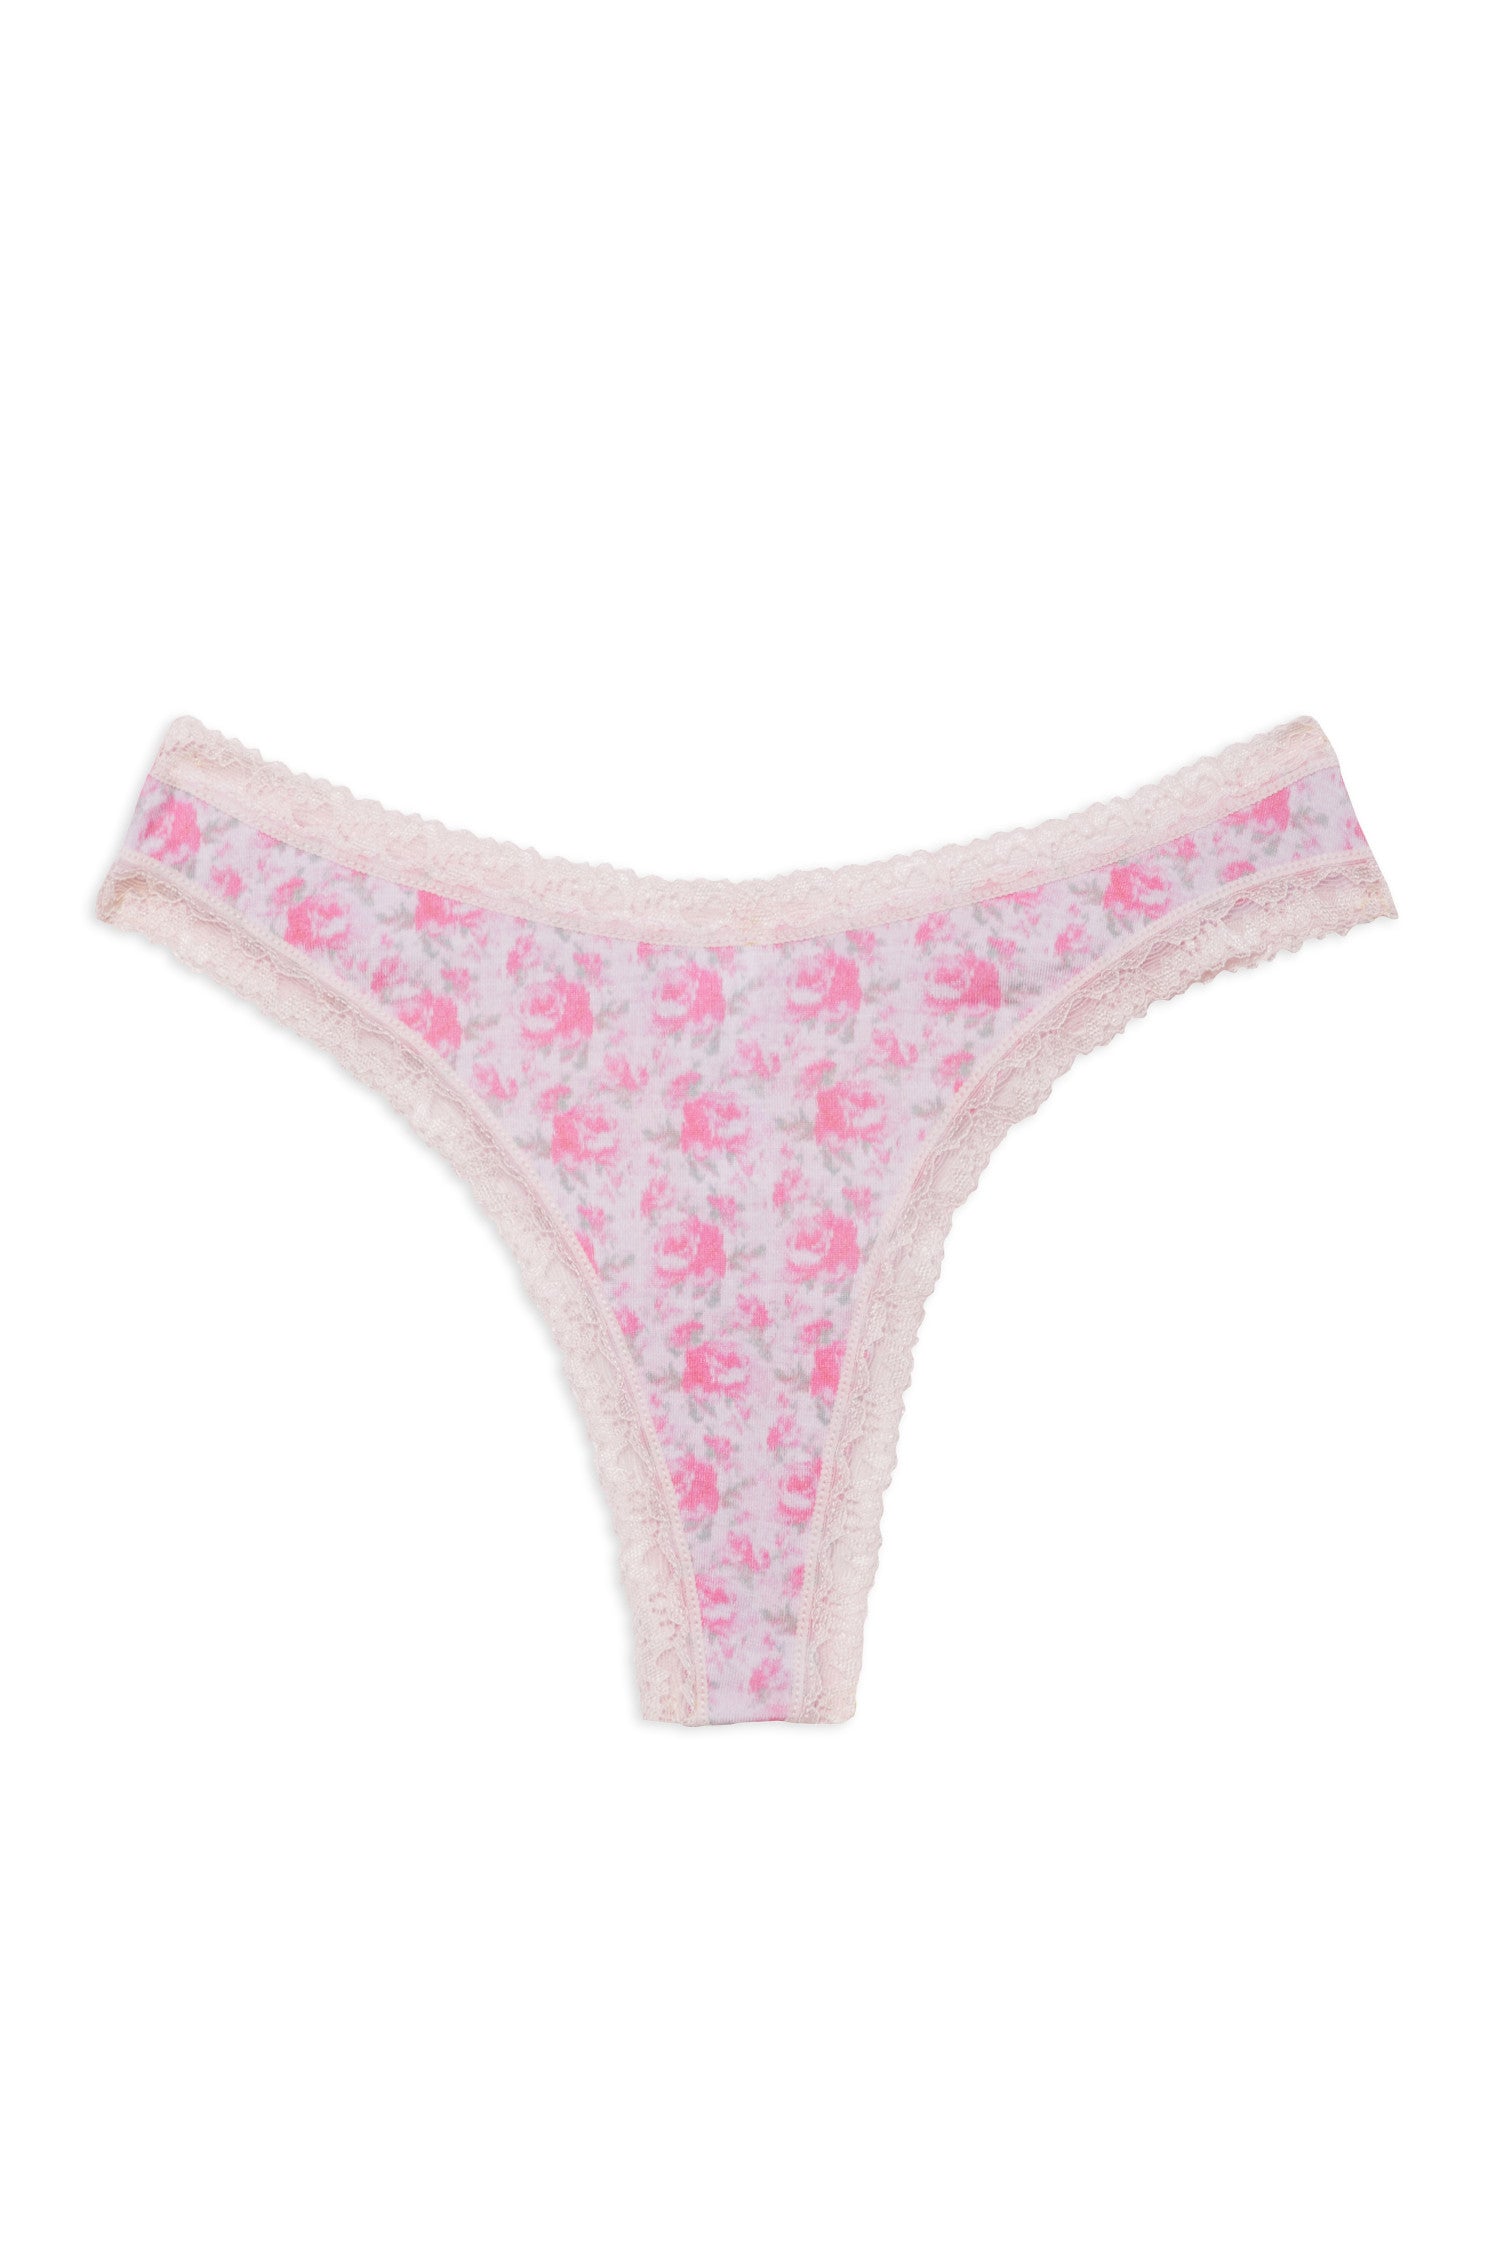 Fabiurt panties for women Valentines Day Thong Panties Womens Low Rise Lace  Panties Comfy Thongs,Pink 